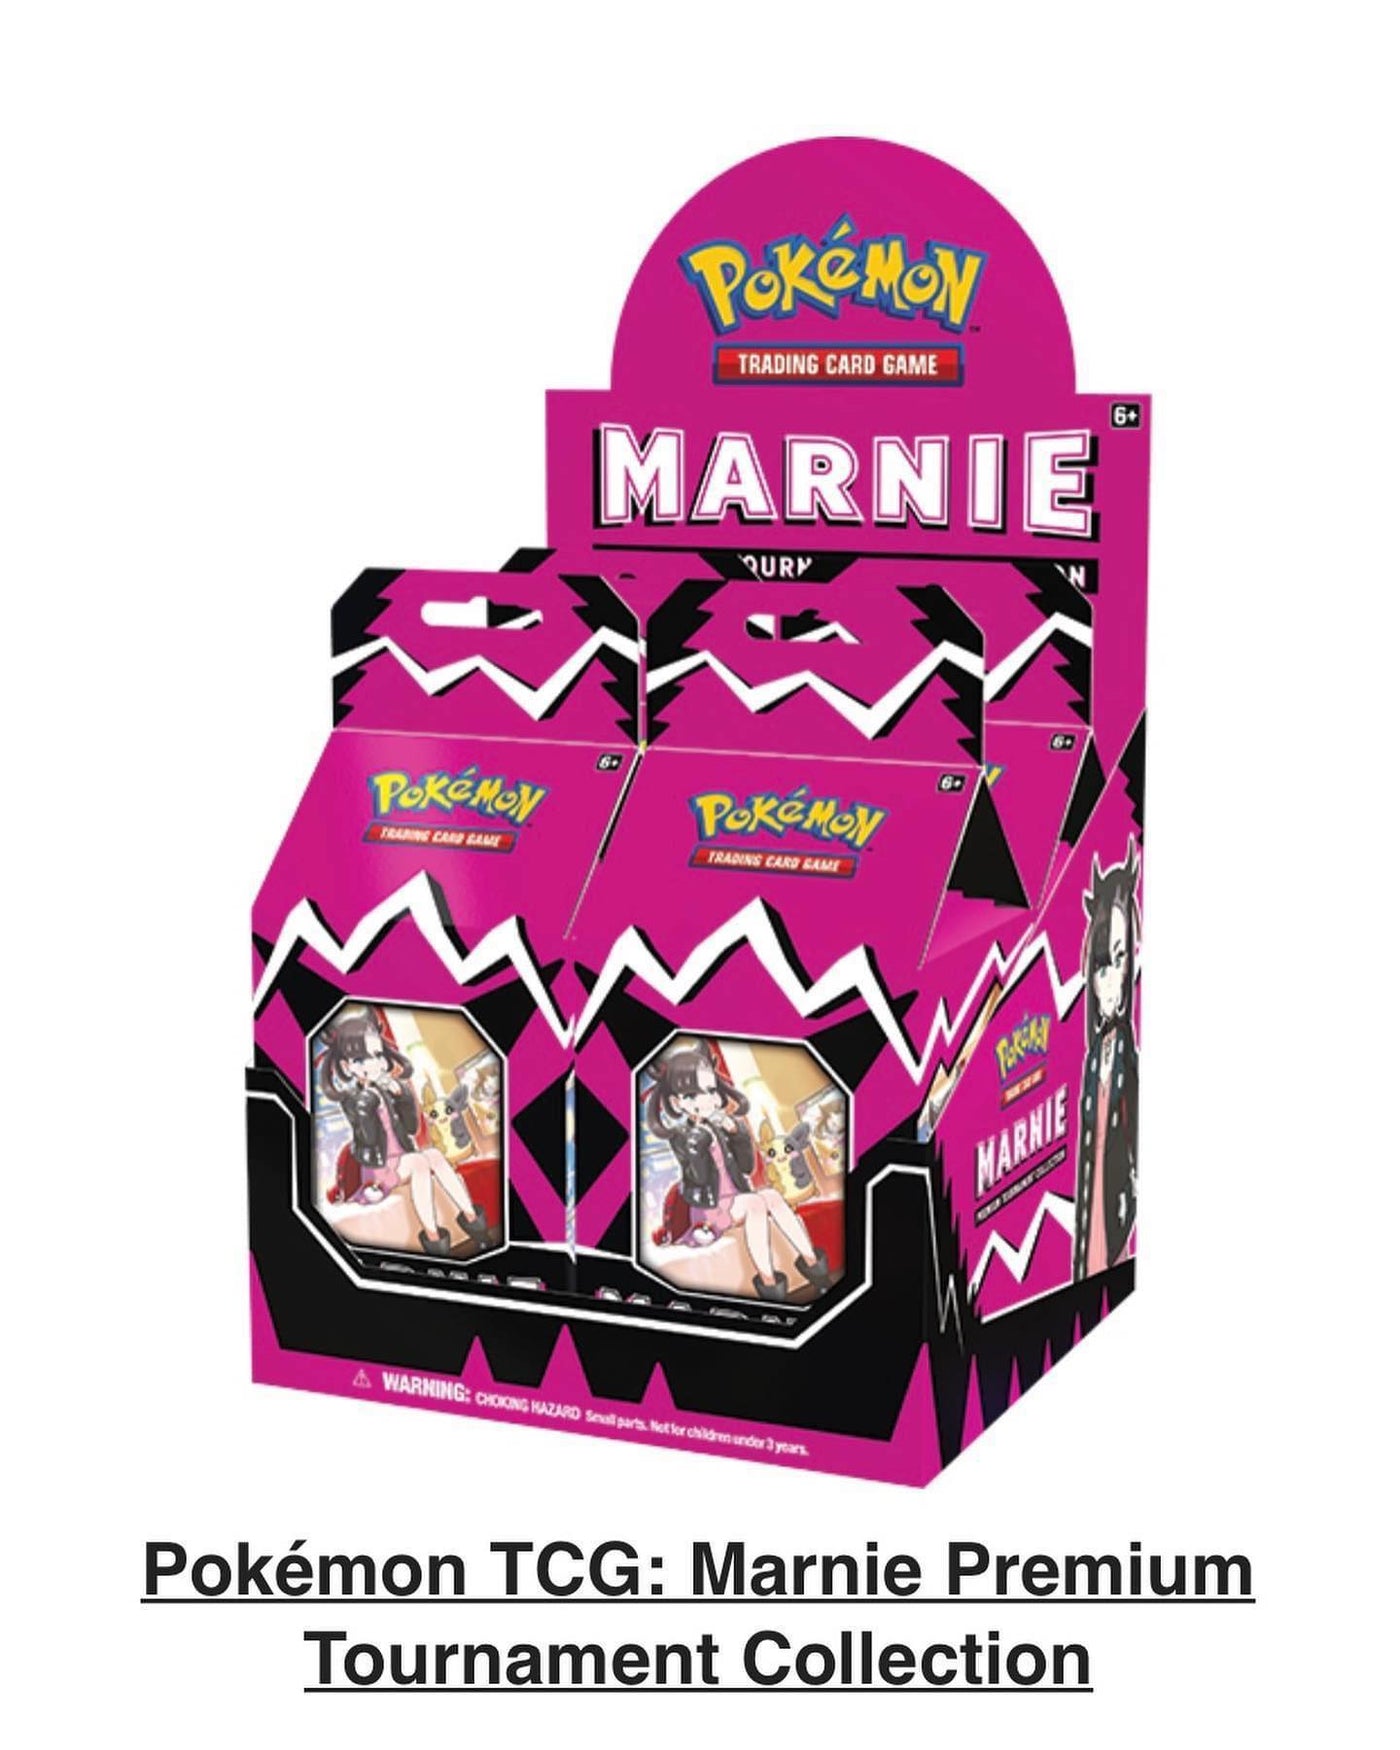 marnie premium tournament collection